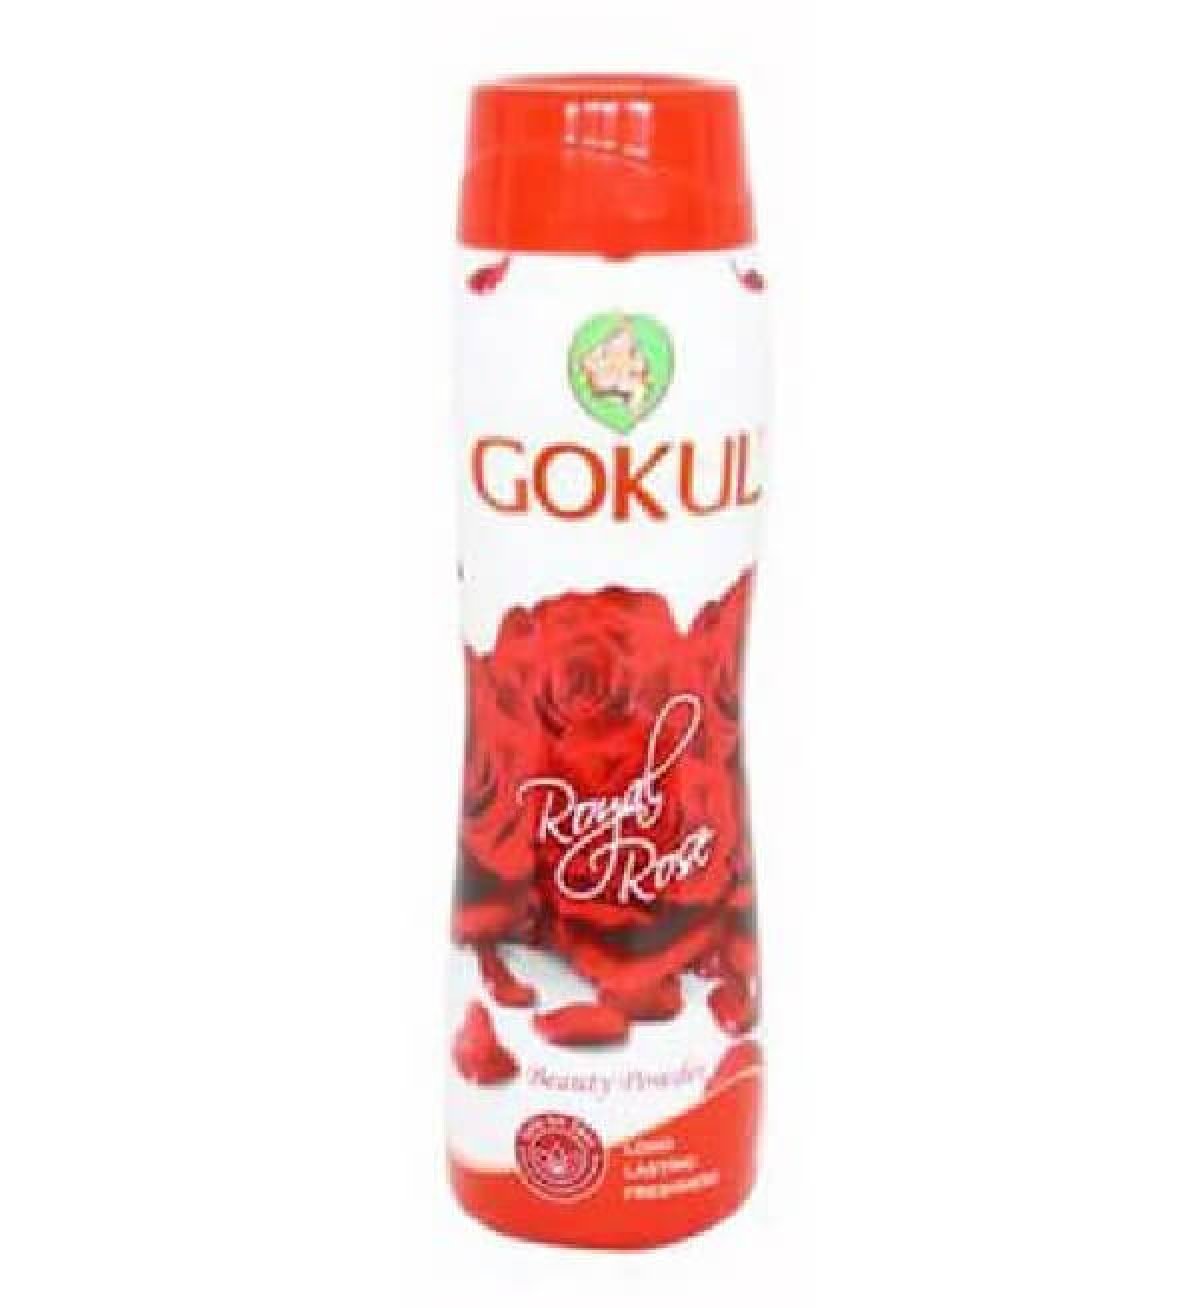 GOKUL SANTOL SOAP - Buy GOKUL SANTOL SOAP online from Graceonline.in